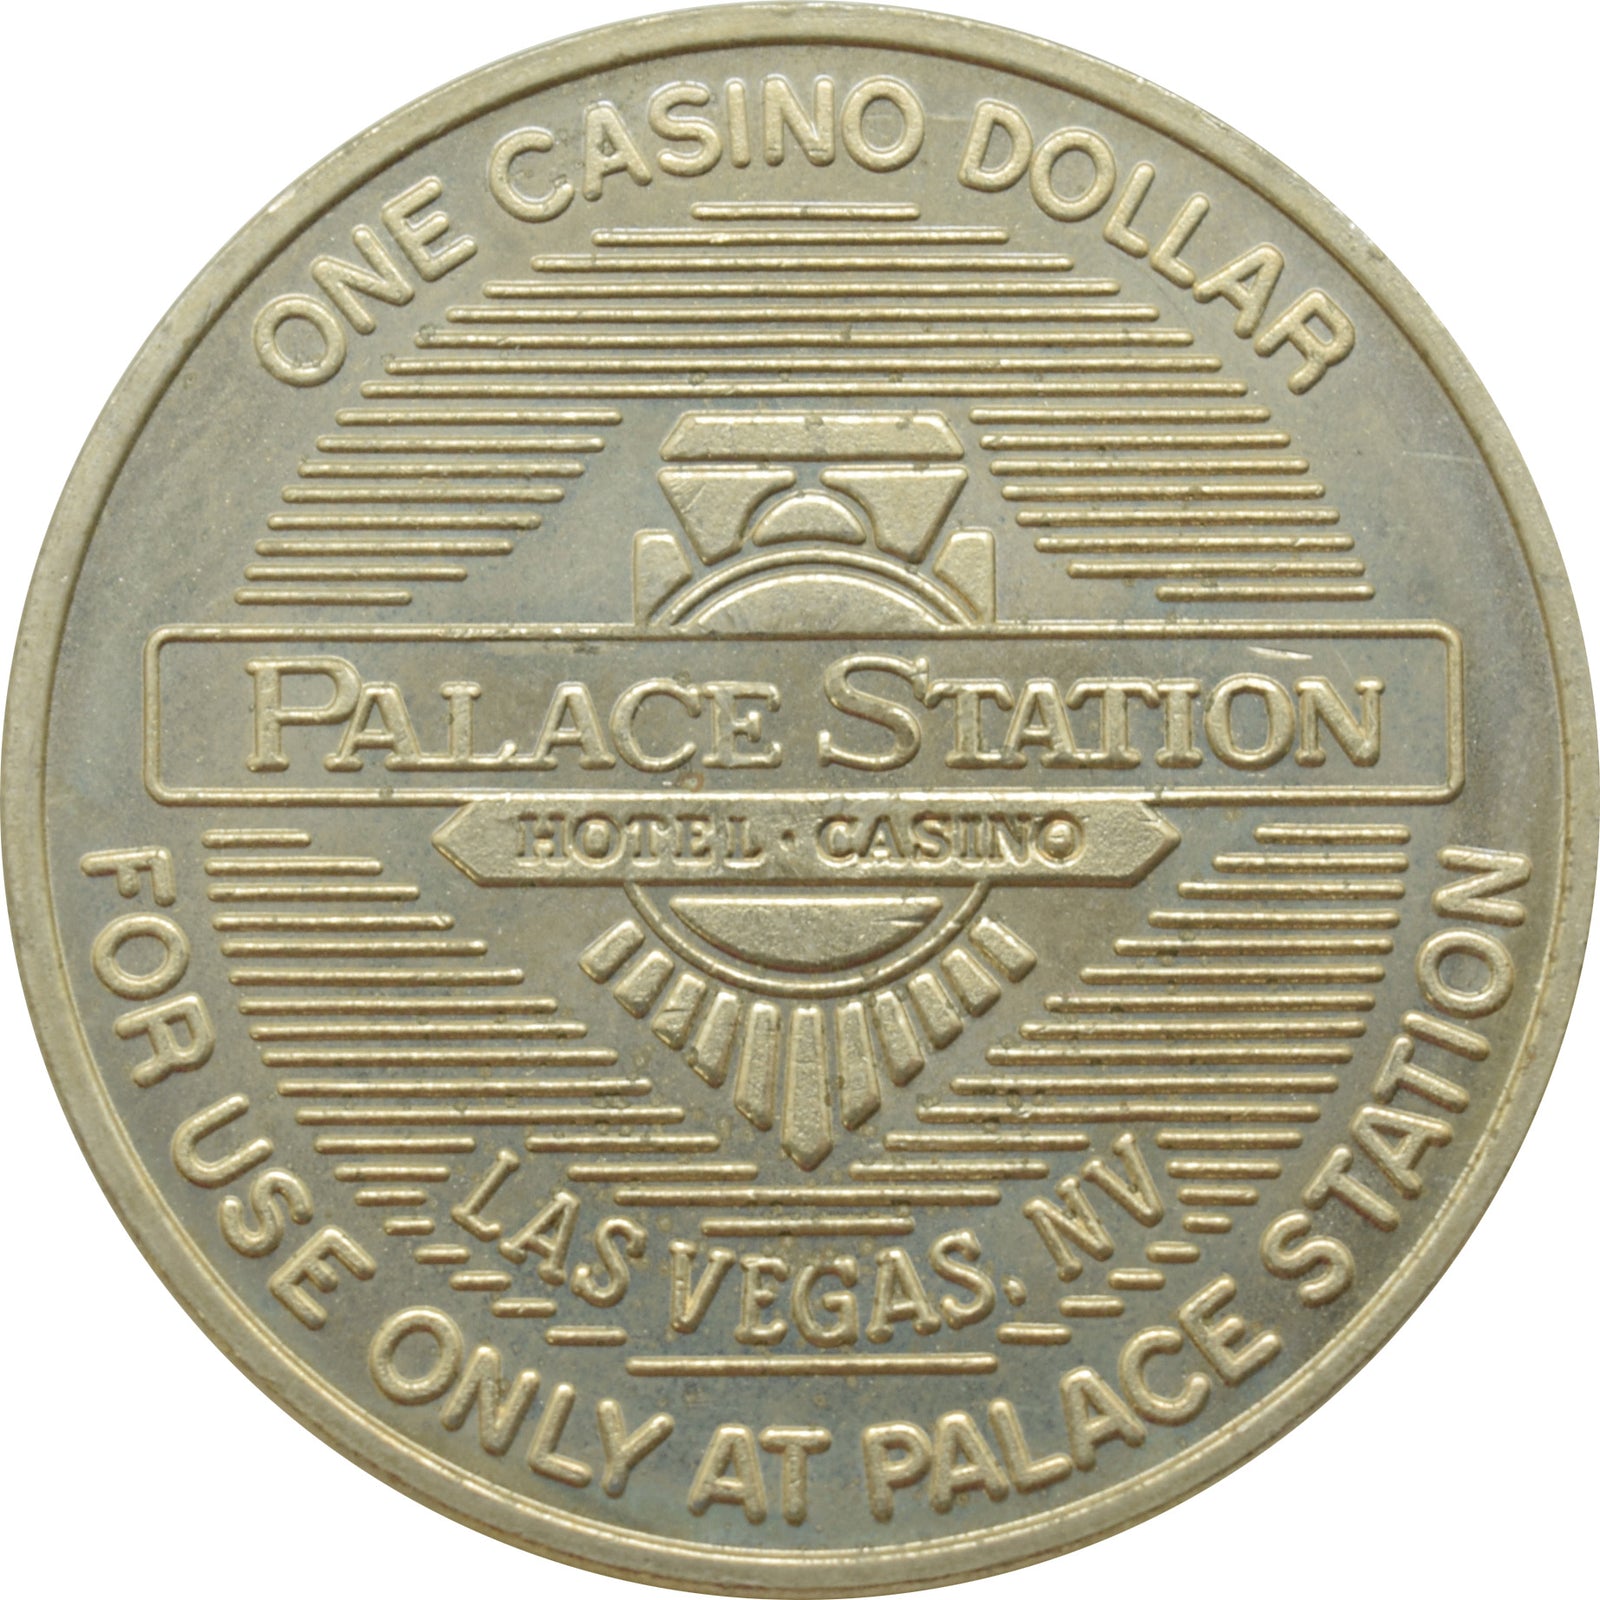 palace station casino human resources